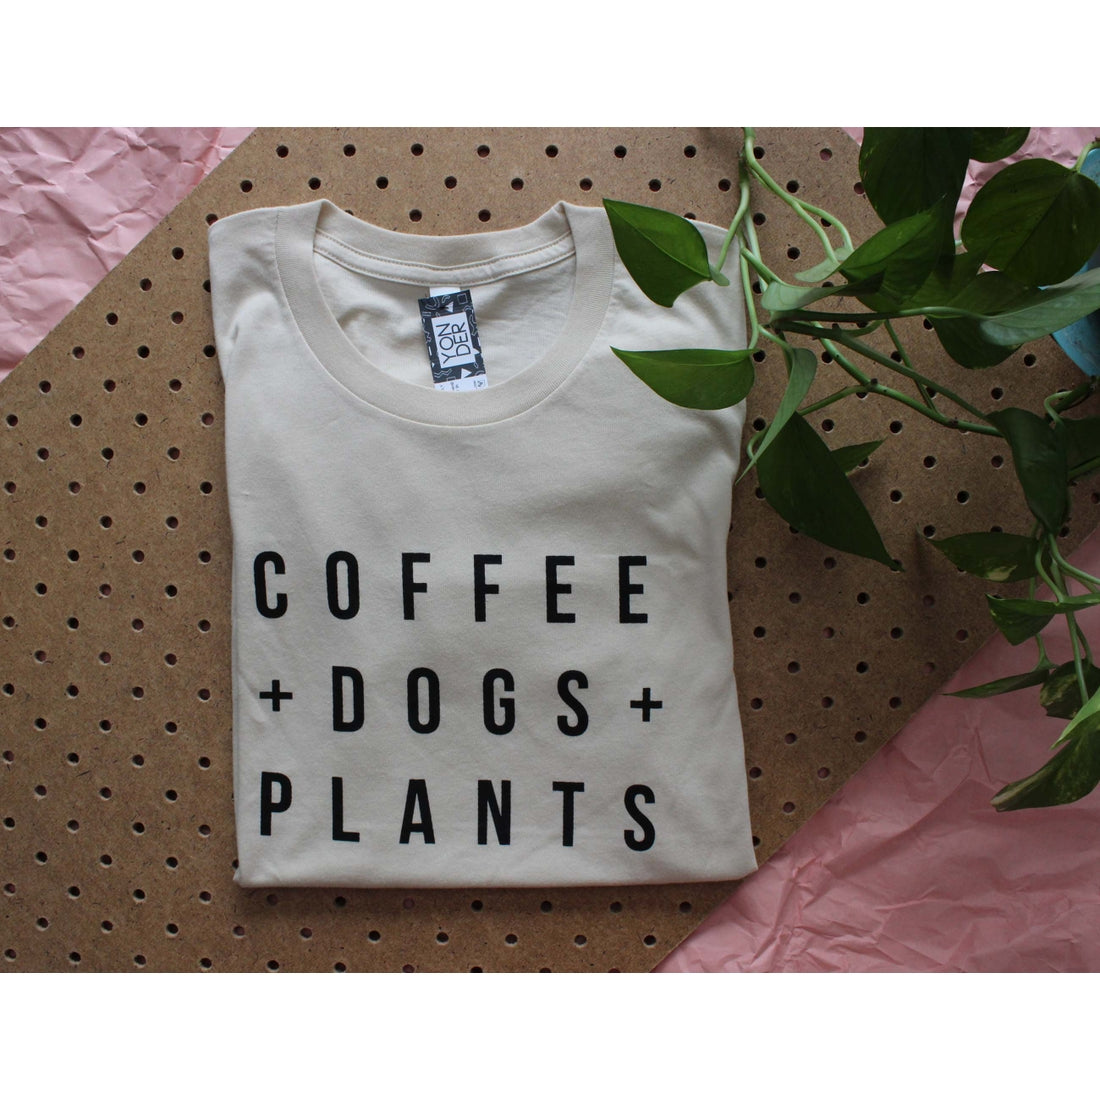 Coffee + Dogs + Plants T-shirt